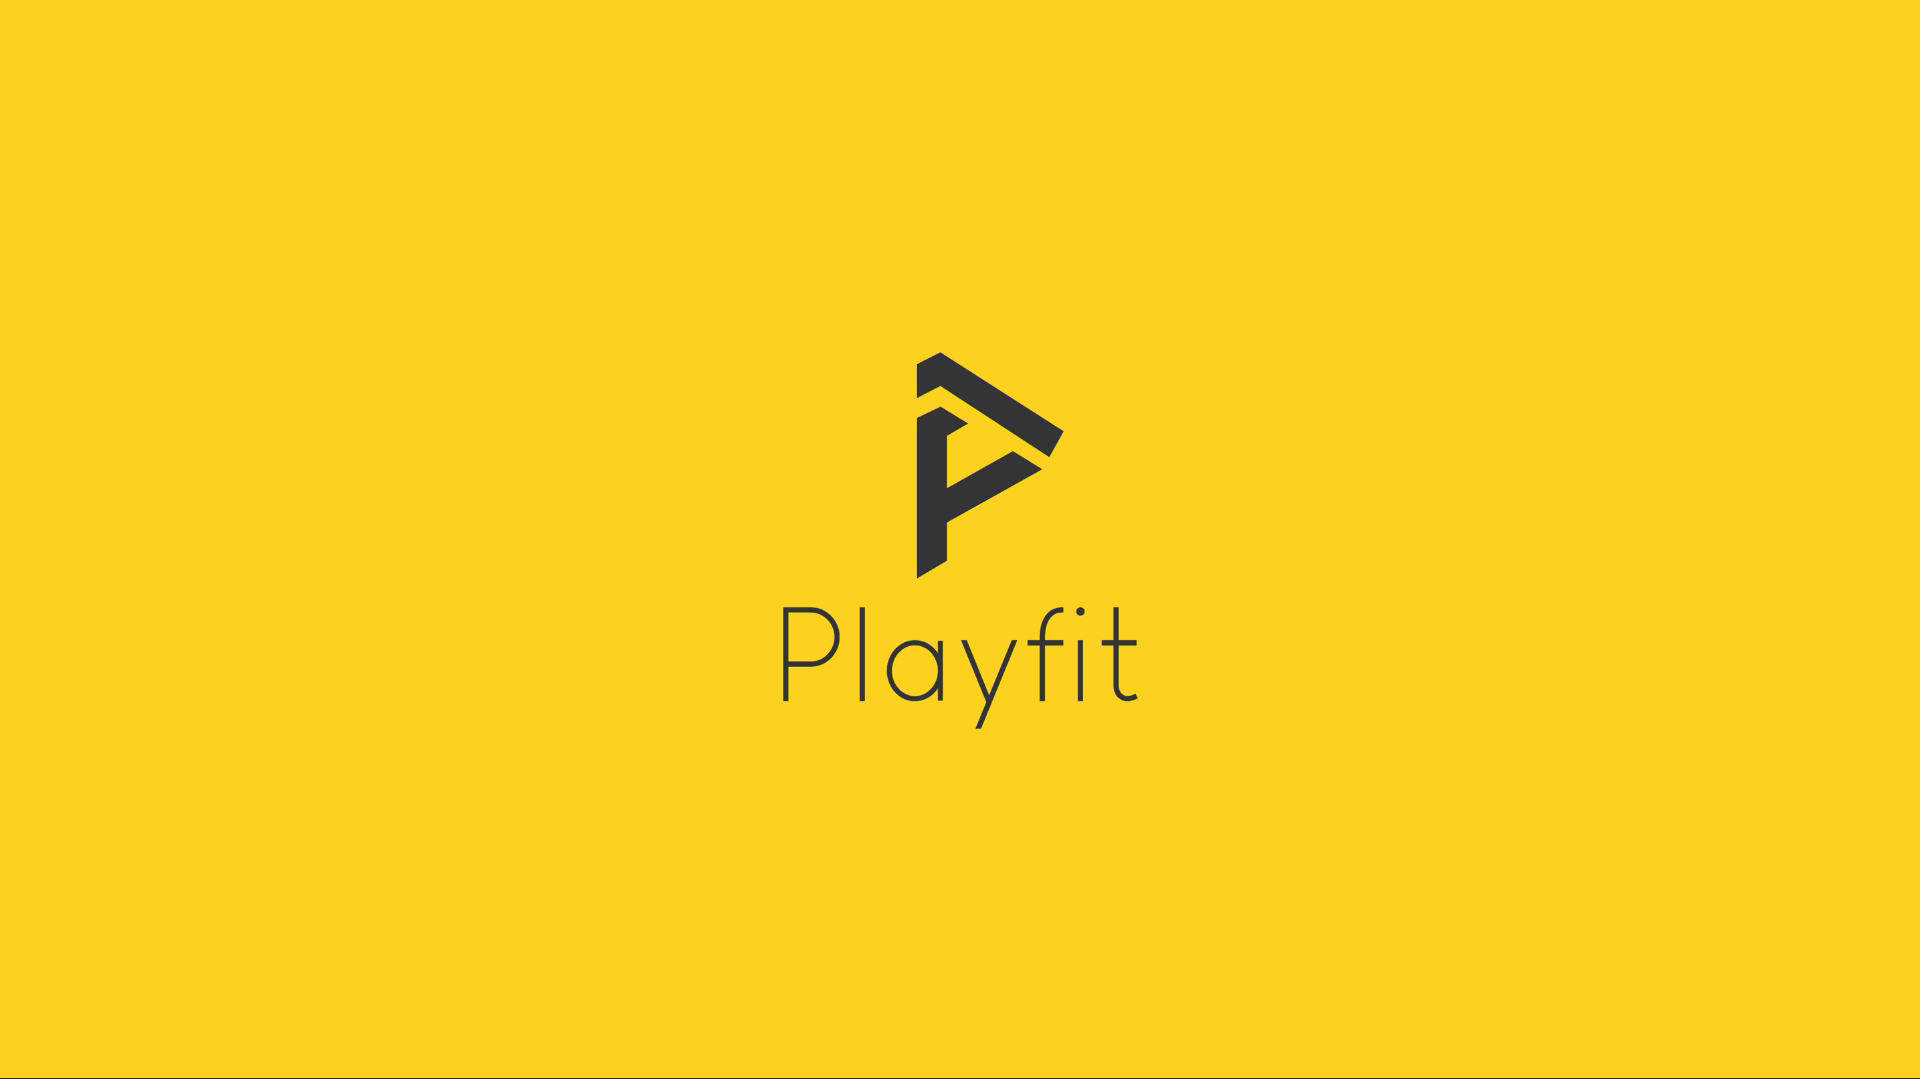 Playfit